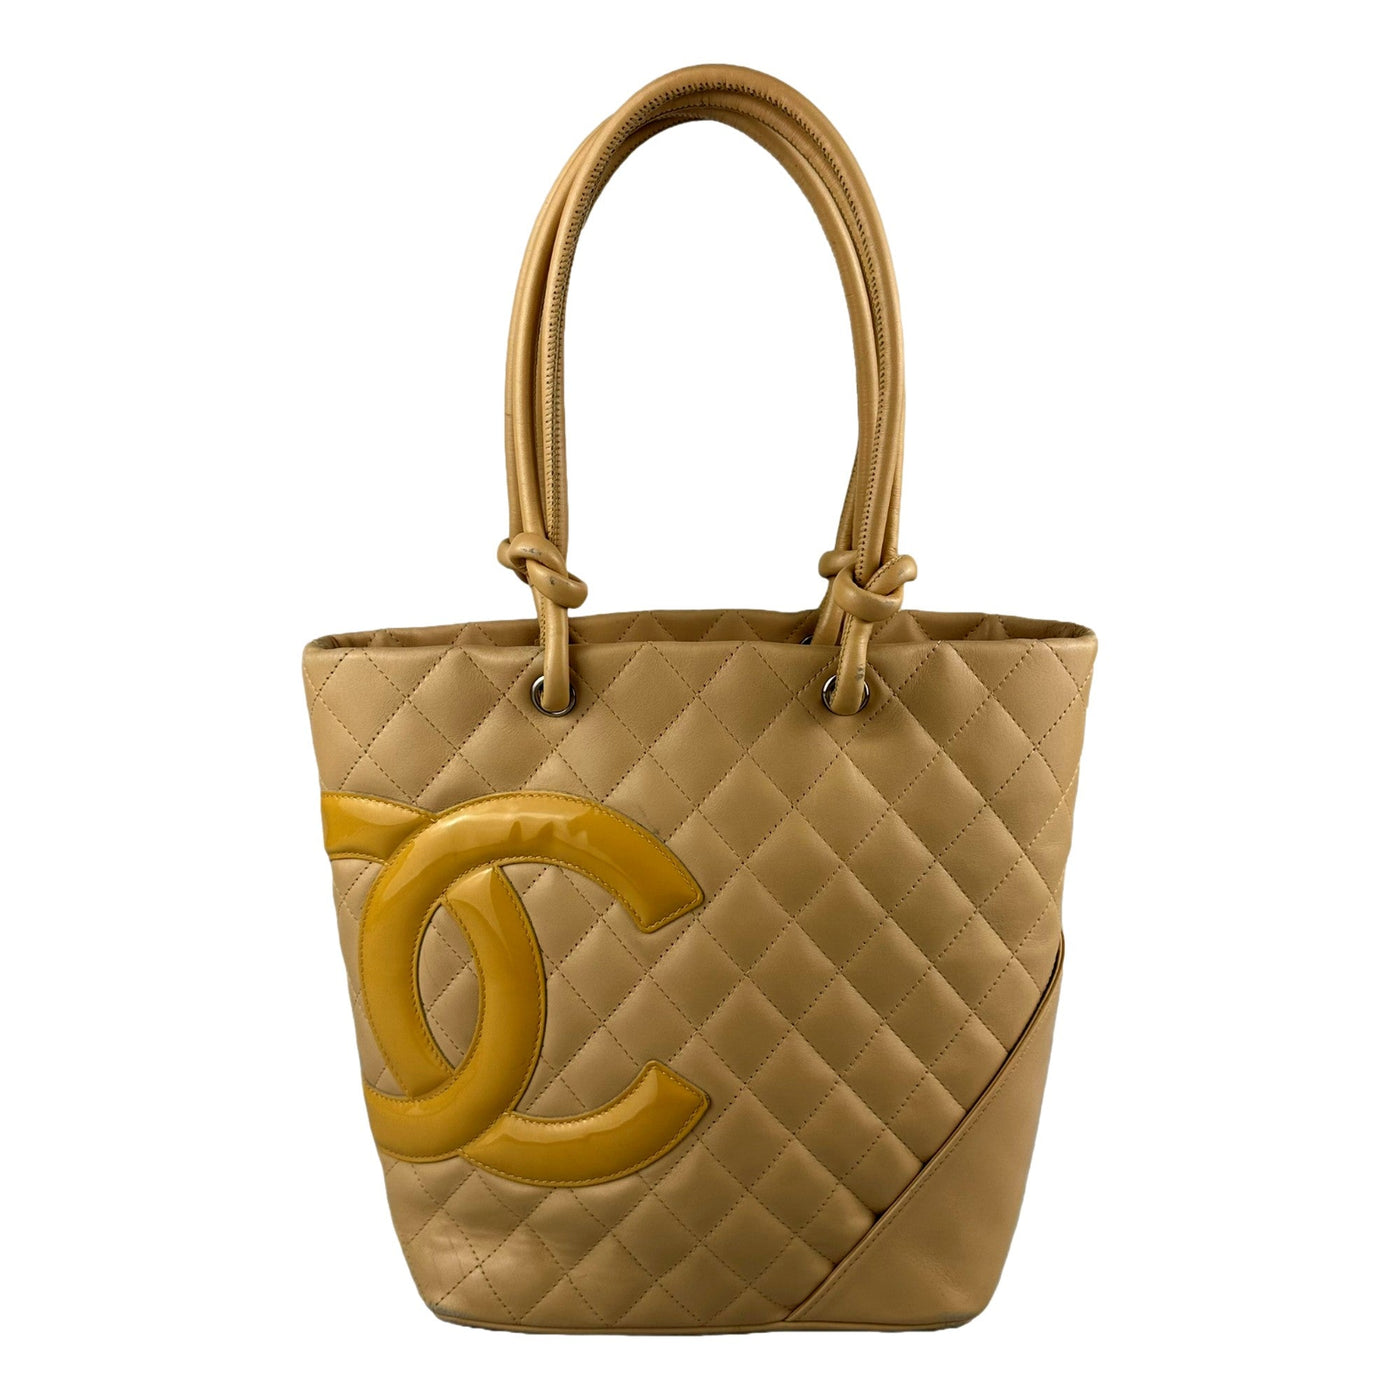 Chanel Tote Bag Cambon Beige Quilted Lambskin Leather - LUXURYMRKT